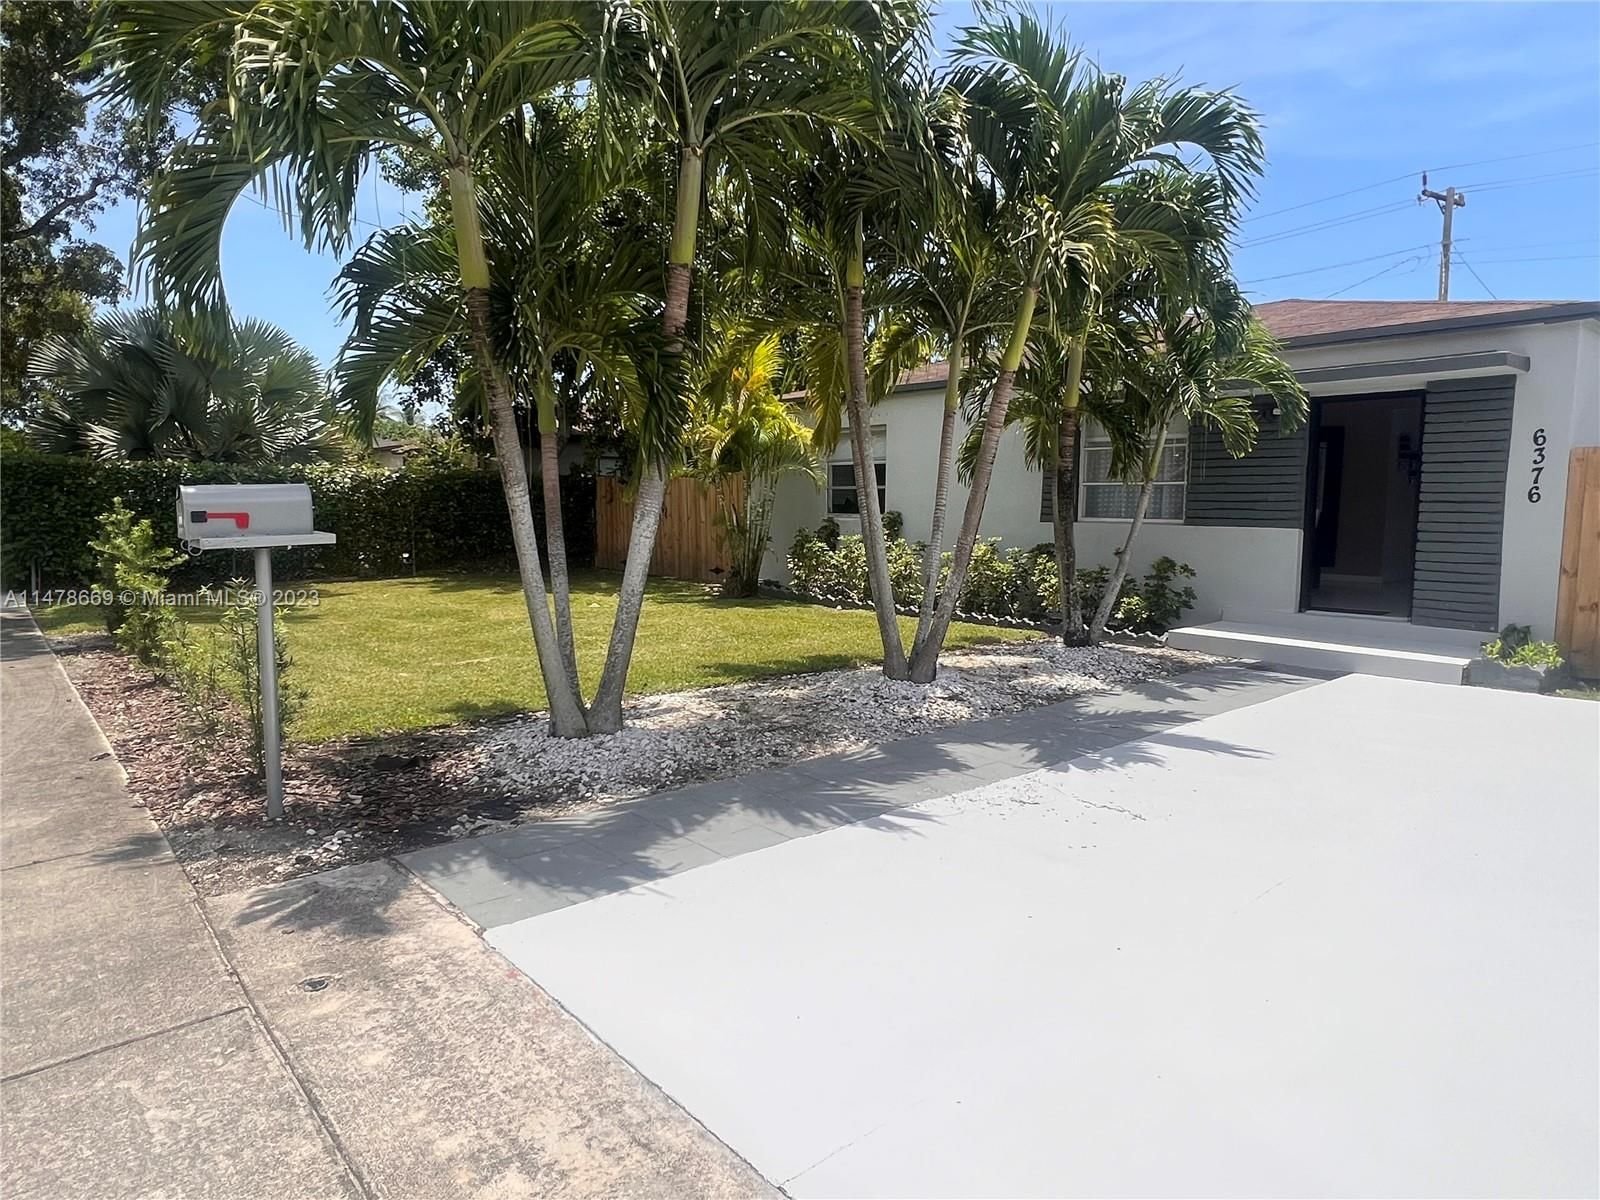 Real estate property located at 6376 39th ST, Miami-Dade County, CENTRAL MIAMI PART 2, Miami, FL